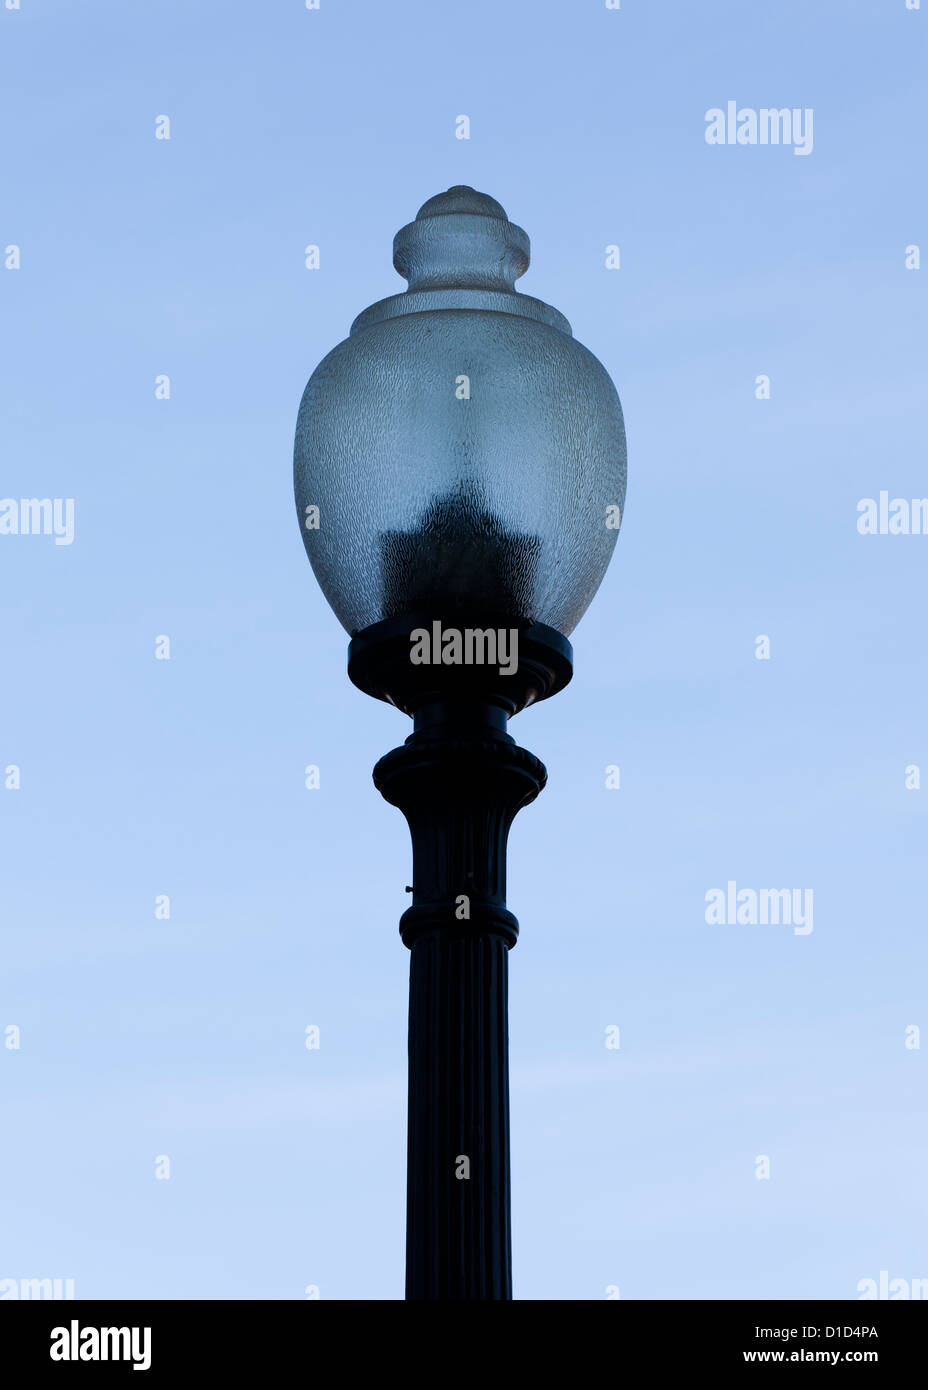 Old street lamp - USA Stock Photo